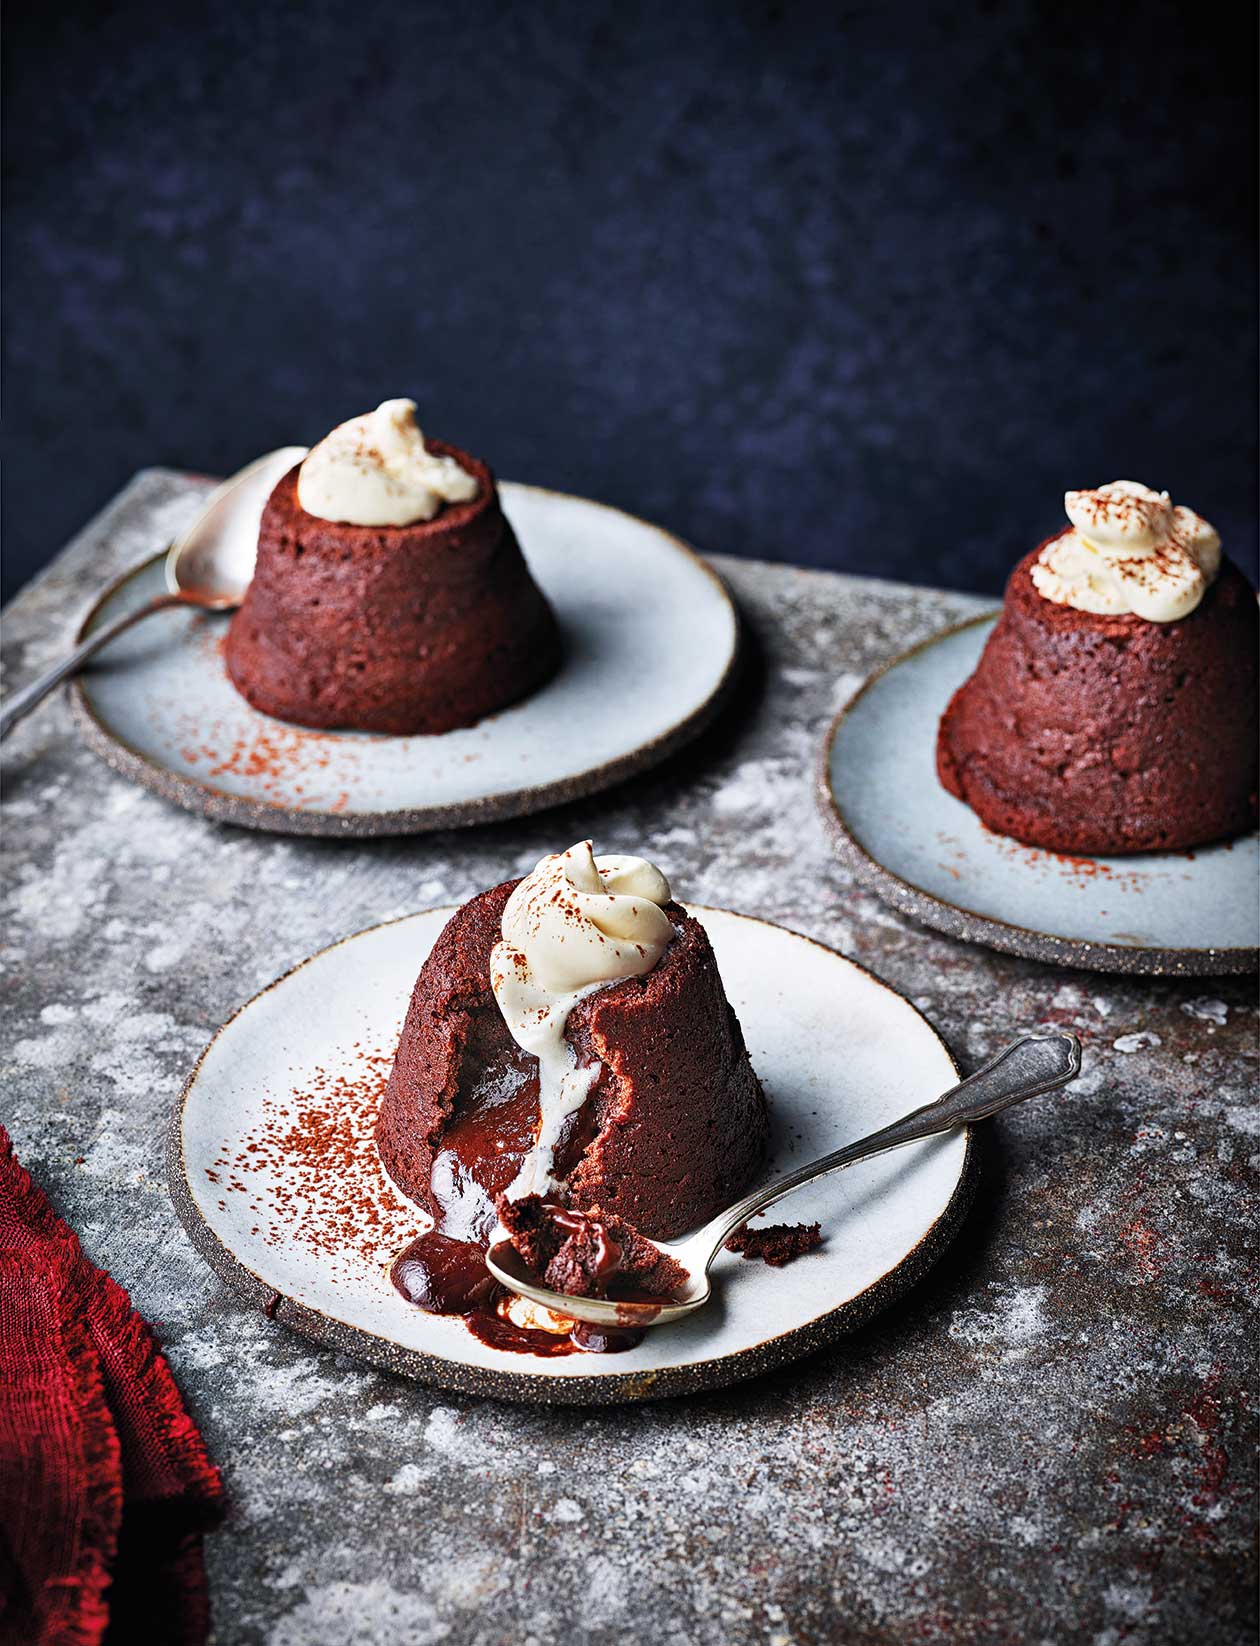 Make Gooey Chocolate Lava Cake in the Crockpot! | Hip2save